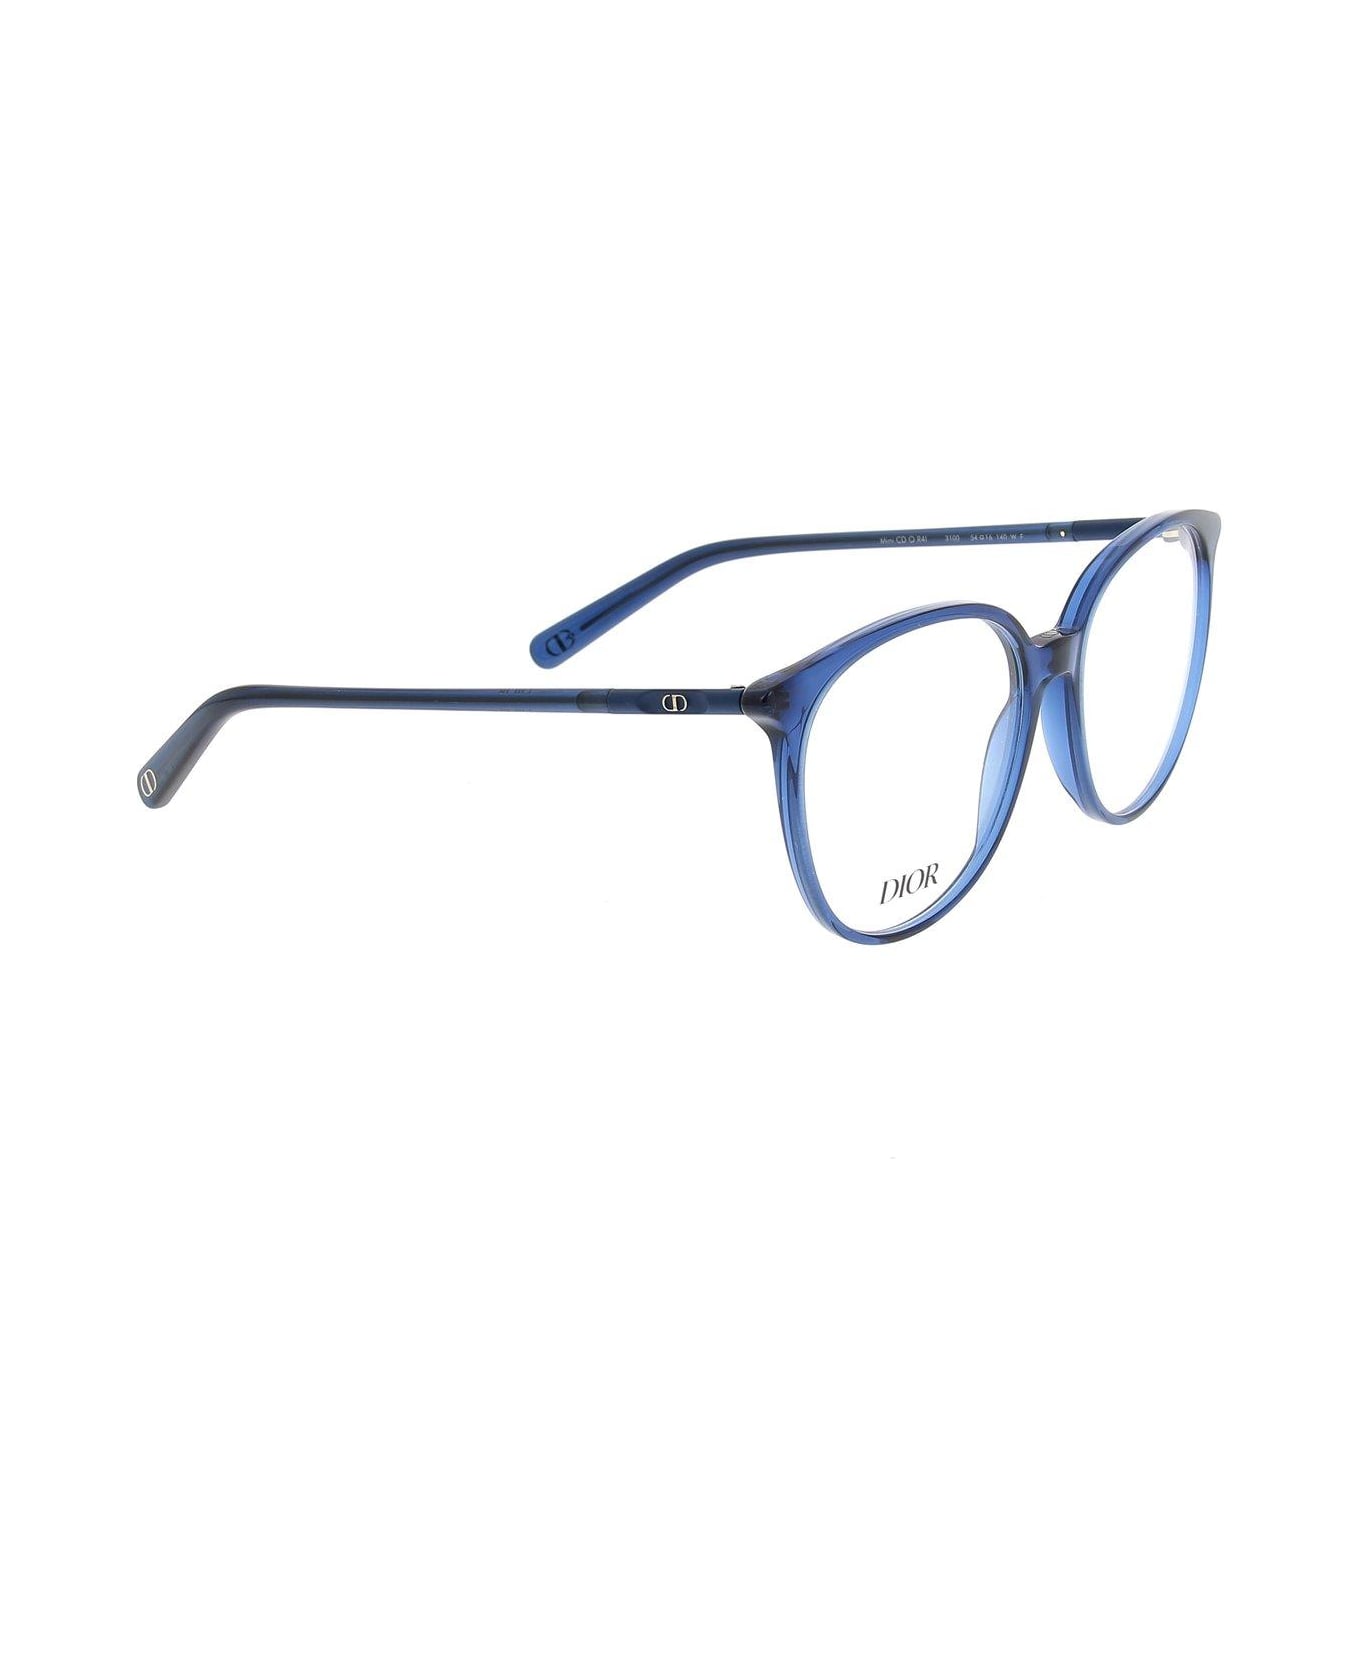 Dior Eyewear Round Frame Glasses - 3100 アイウェア